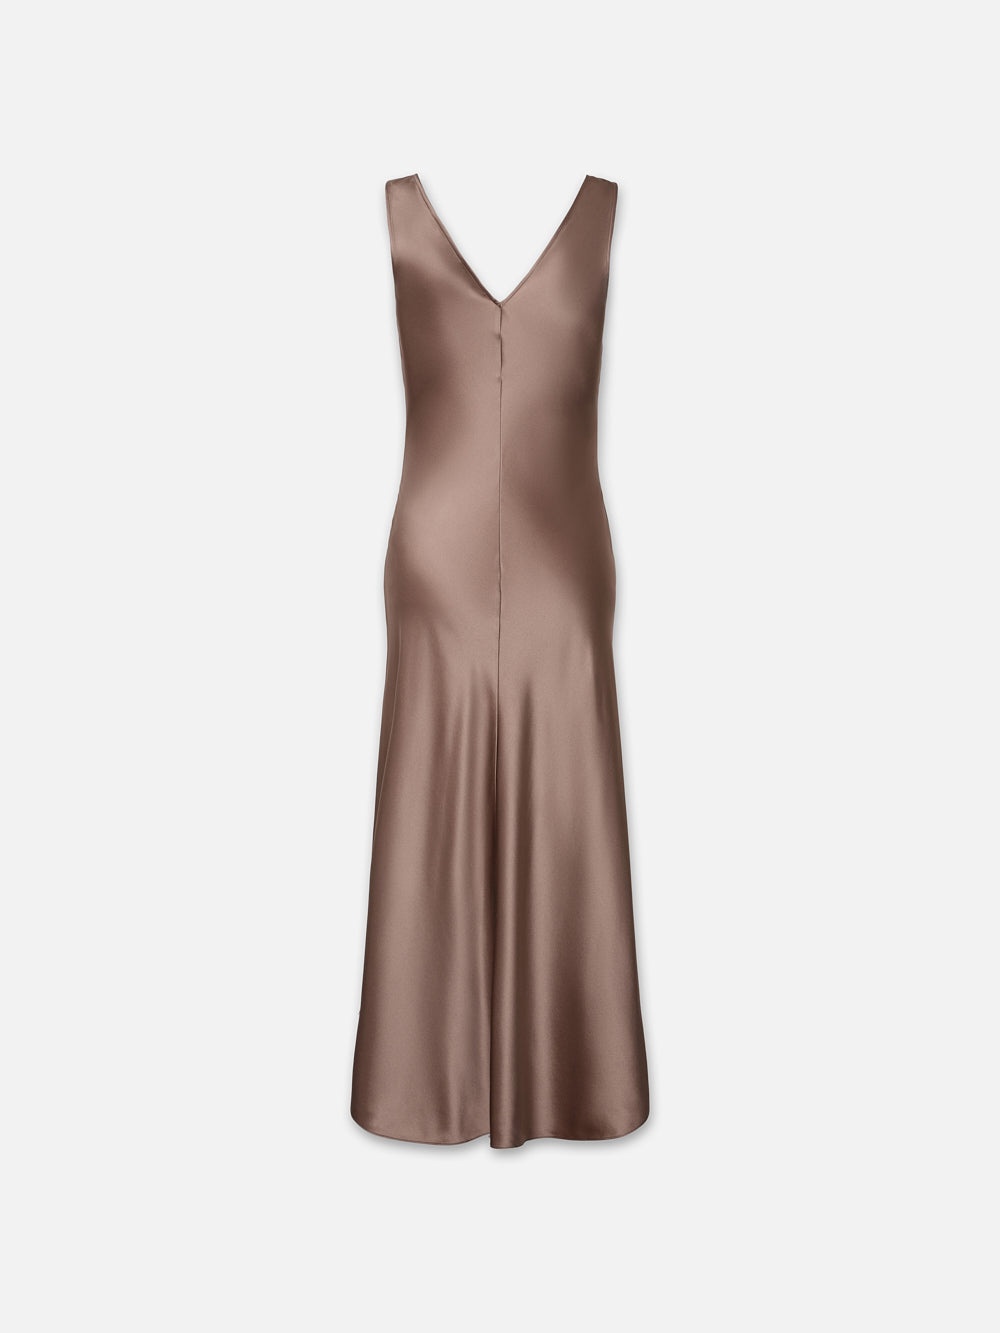 Savannah Dress in Cypress - 3